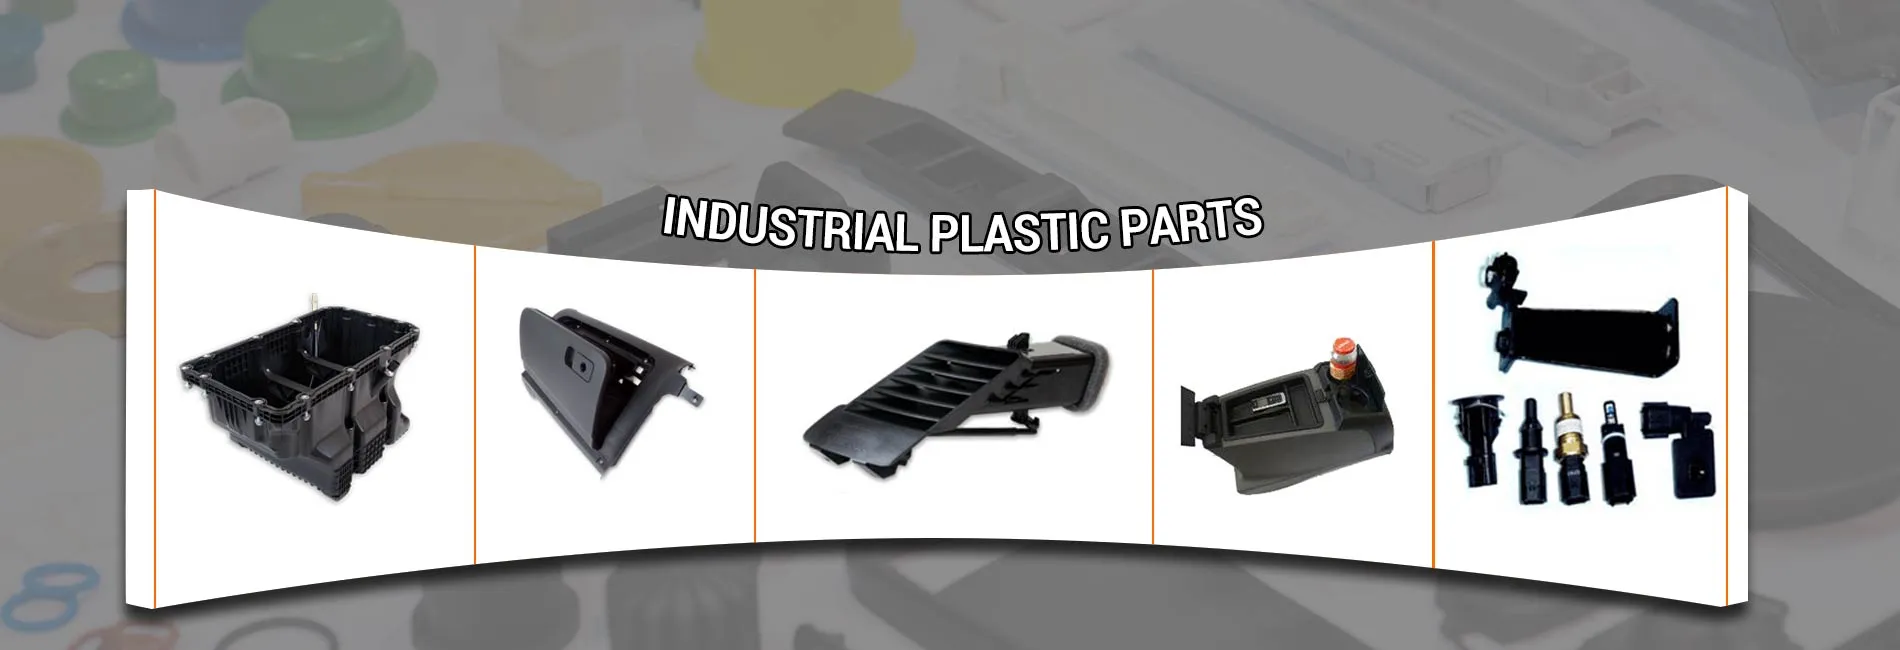 industrial plastic parts in ahmedabad,india